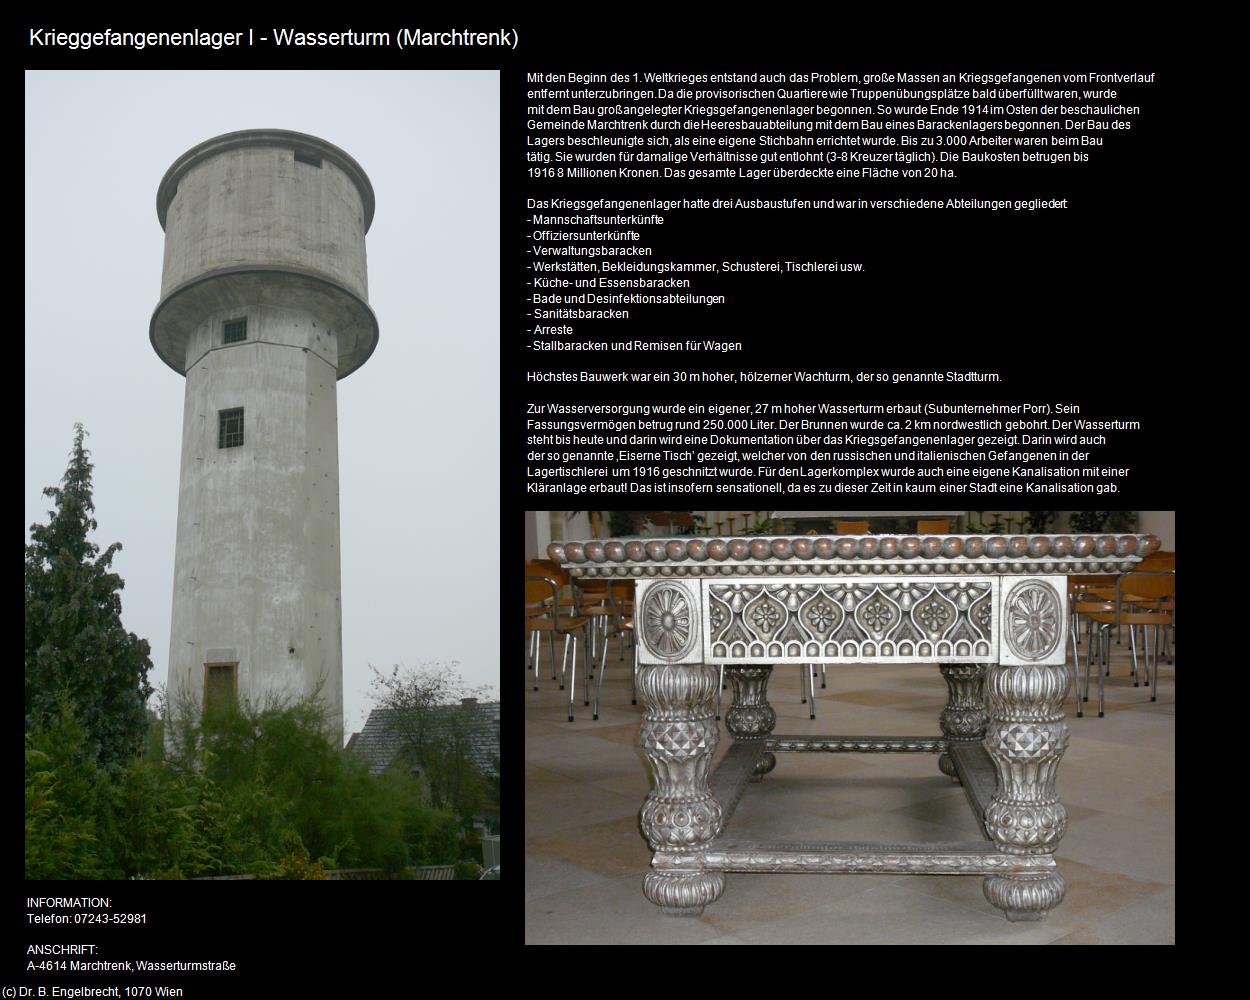 Krieggefangenenlager-Wasserturm (Marchtrenk) in Kulturatlas-OBERÖSTERREICH